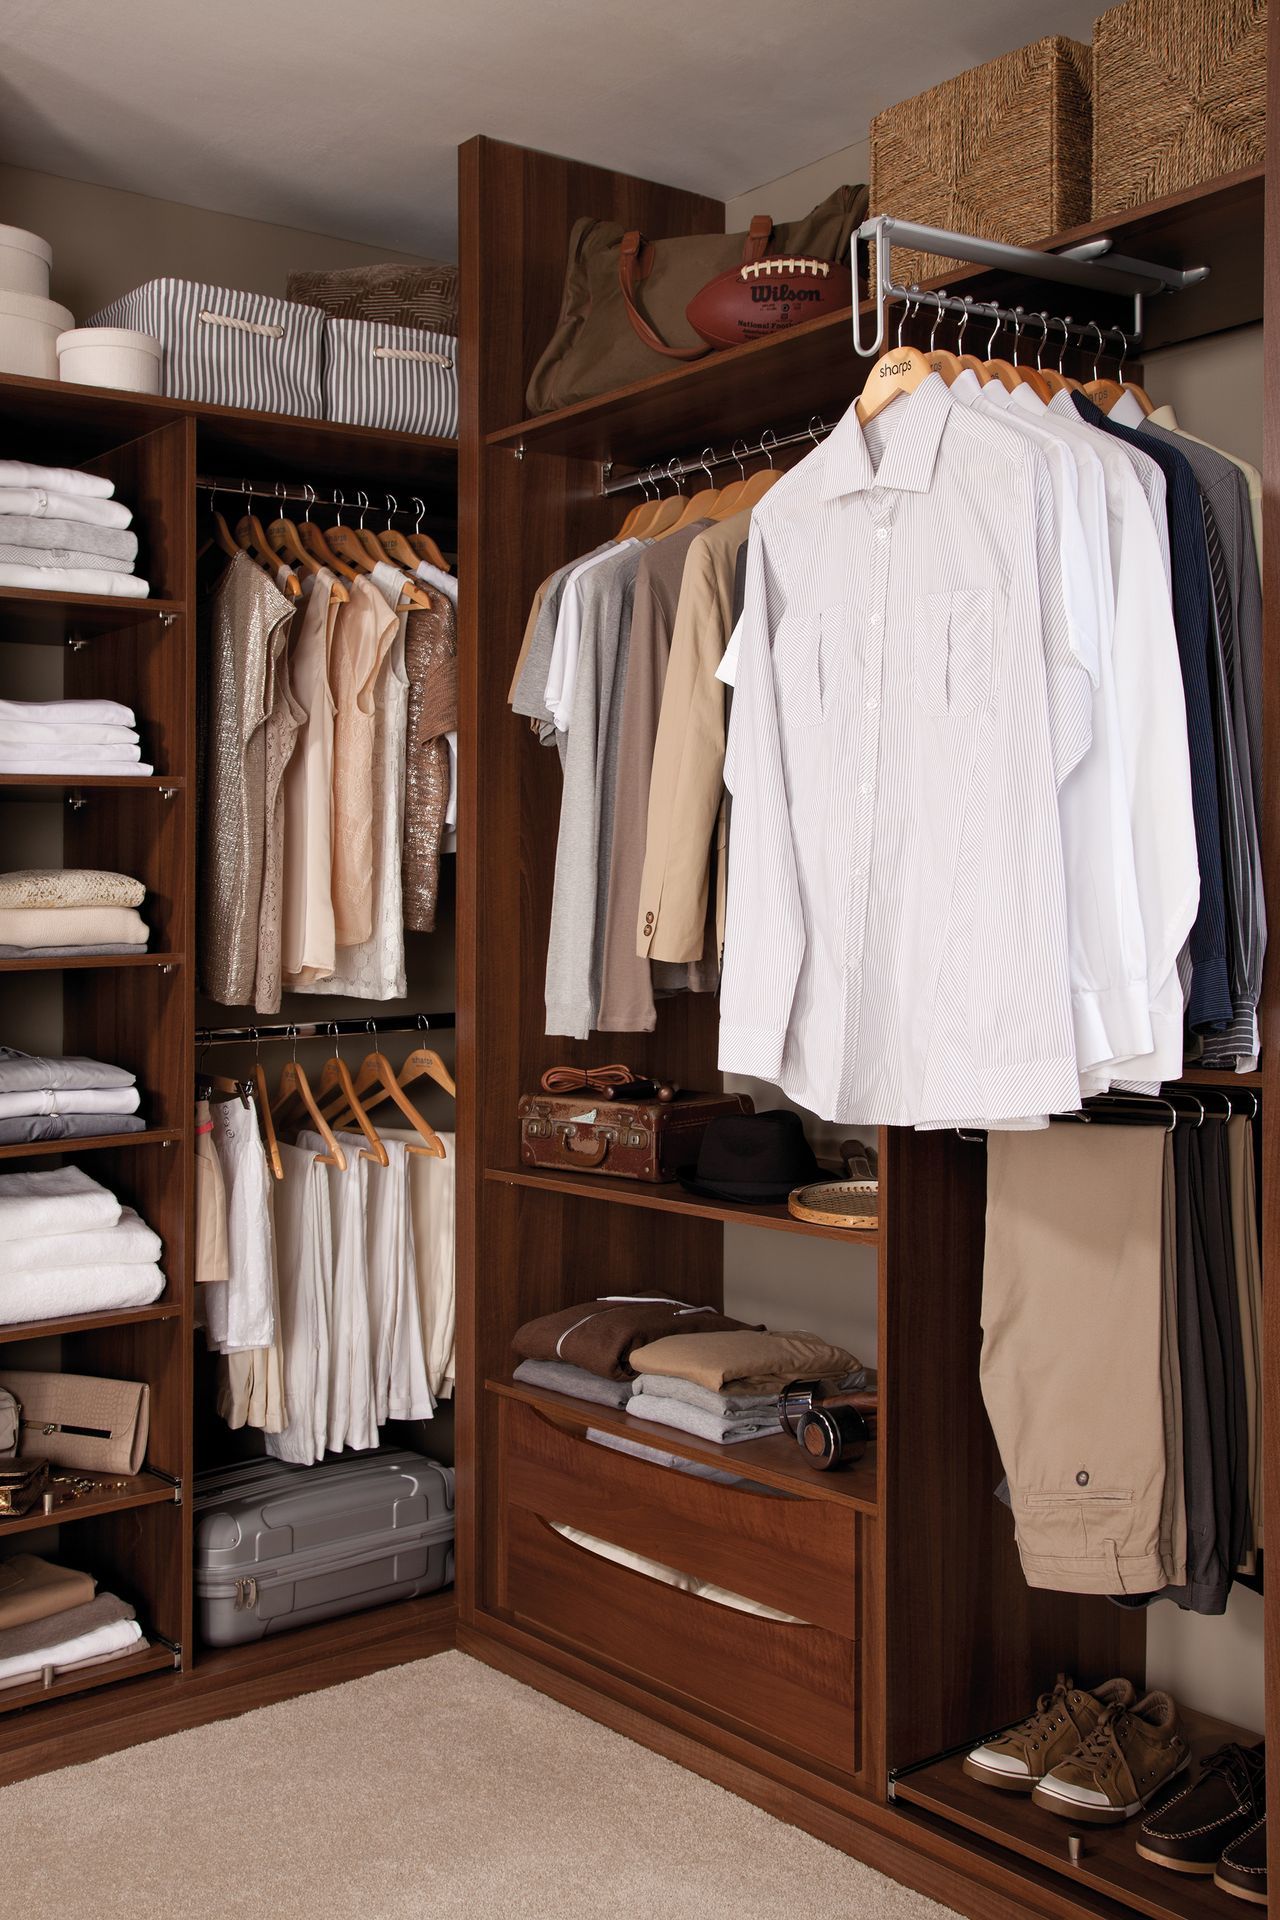 How to maintain a color-organized closet